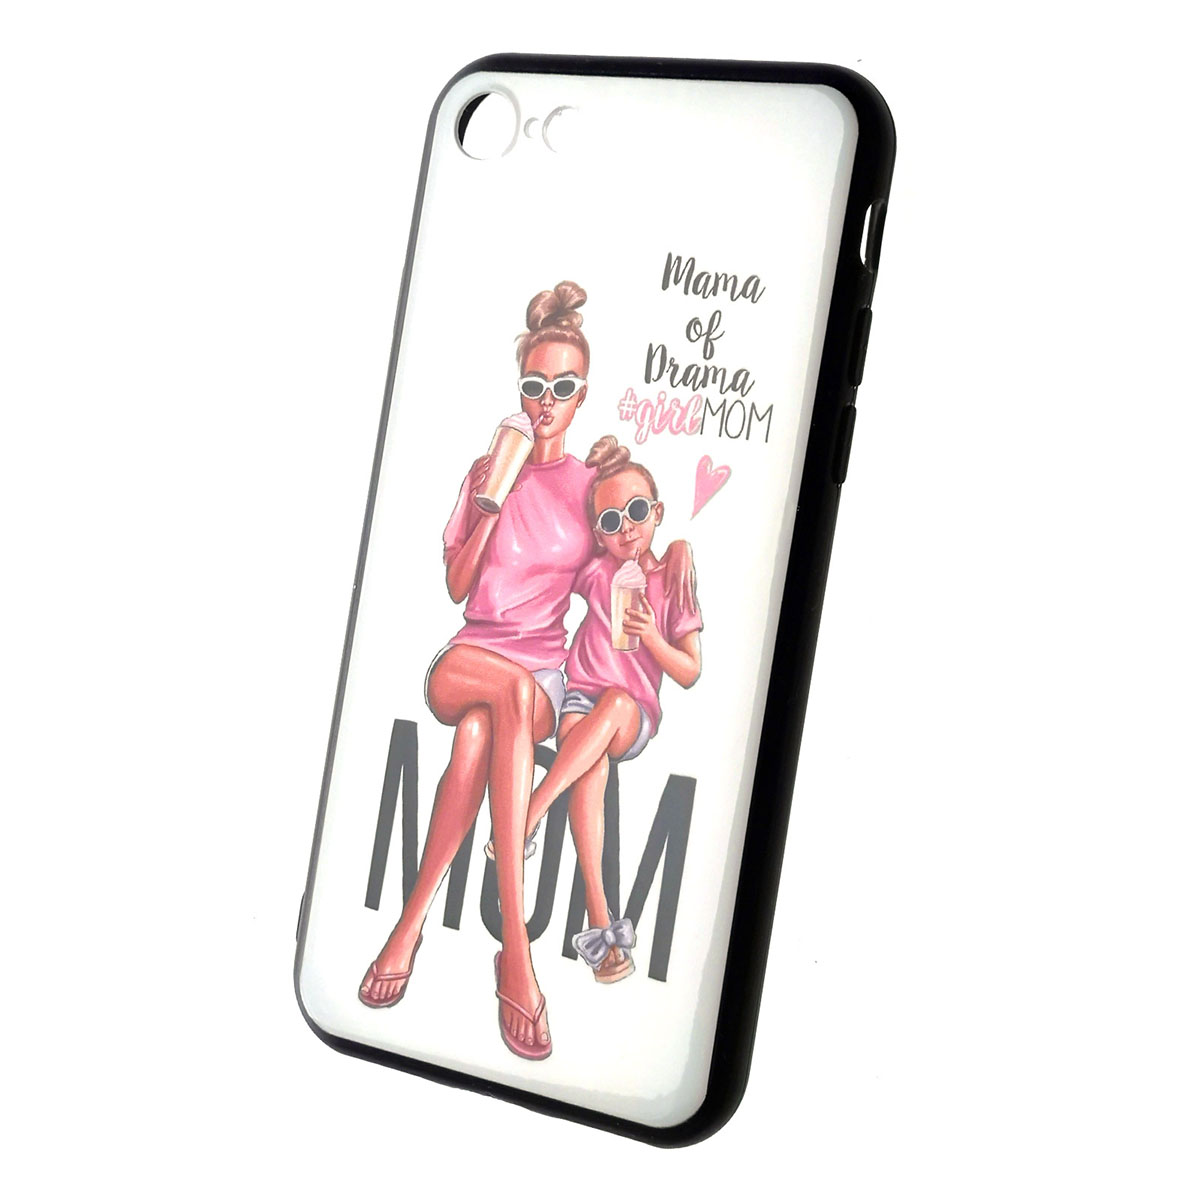 Чехол накладка для APPLE iPhone 7, 8, силикон, рисунок Mama of Drama girlMOM.